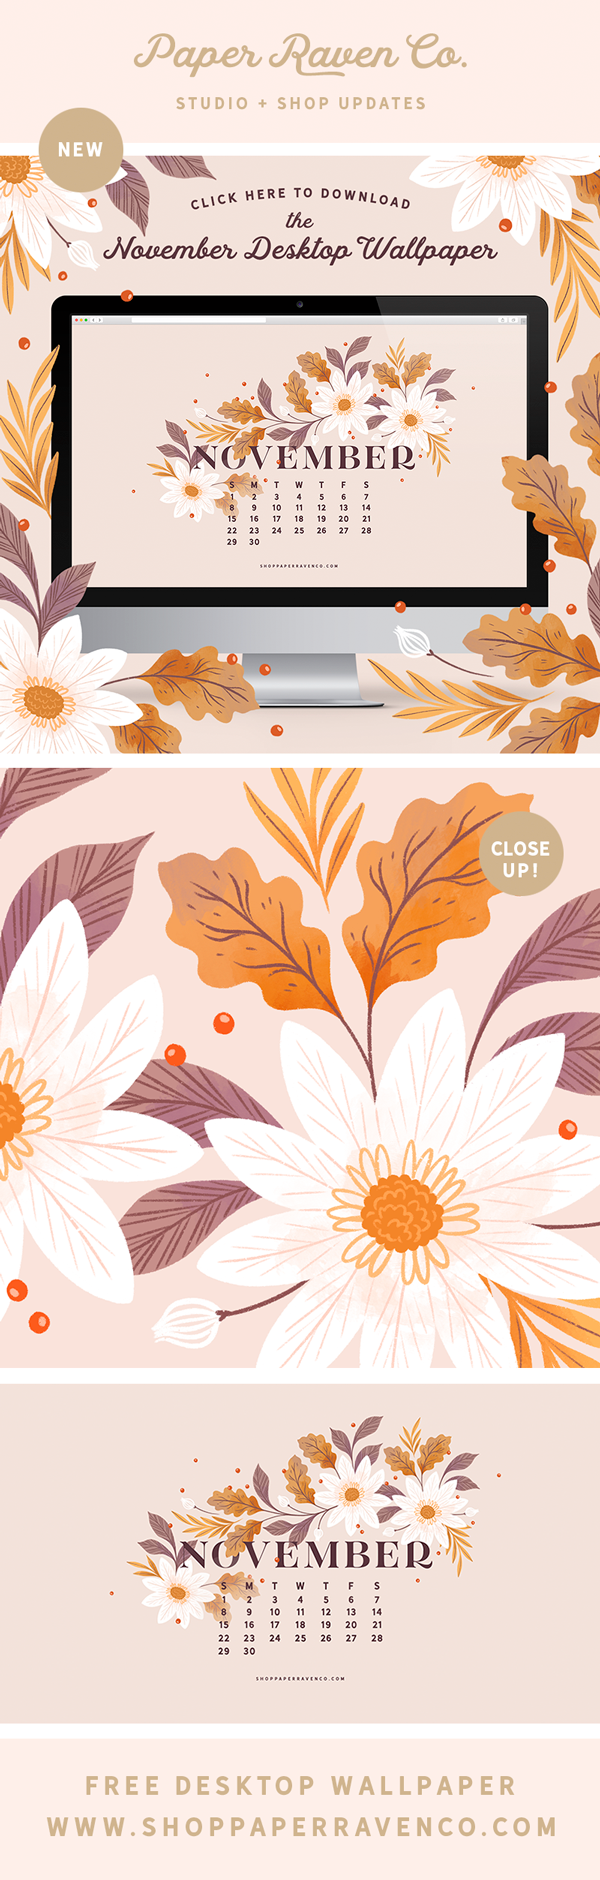 November 2020 Illustrated Desktop Wallpaper by Paper Raven Co. | www.ShopPaperRavenCo.com #dressyourtech #desktopwallpaper #desktopdownload